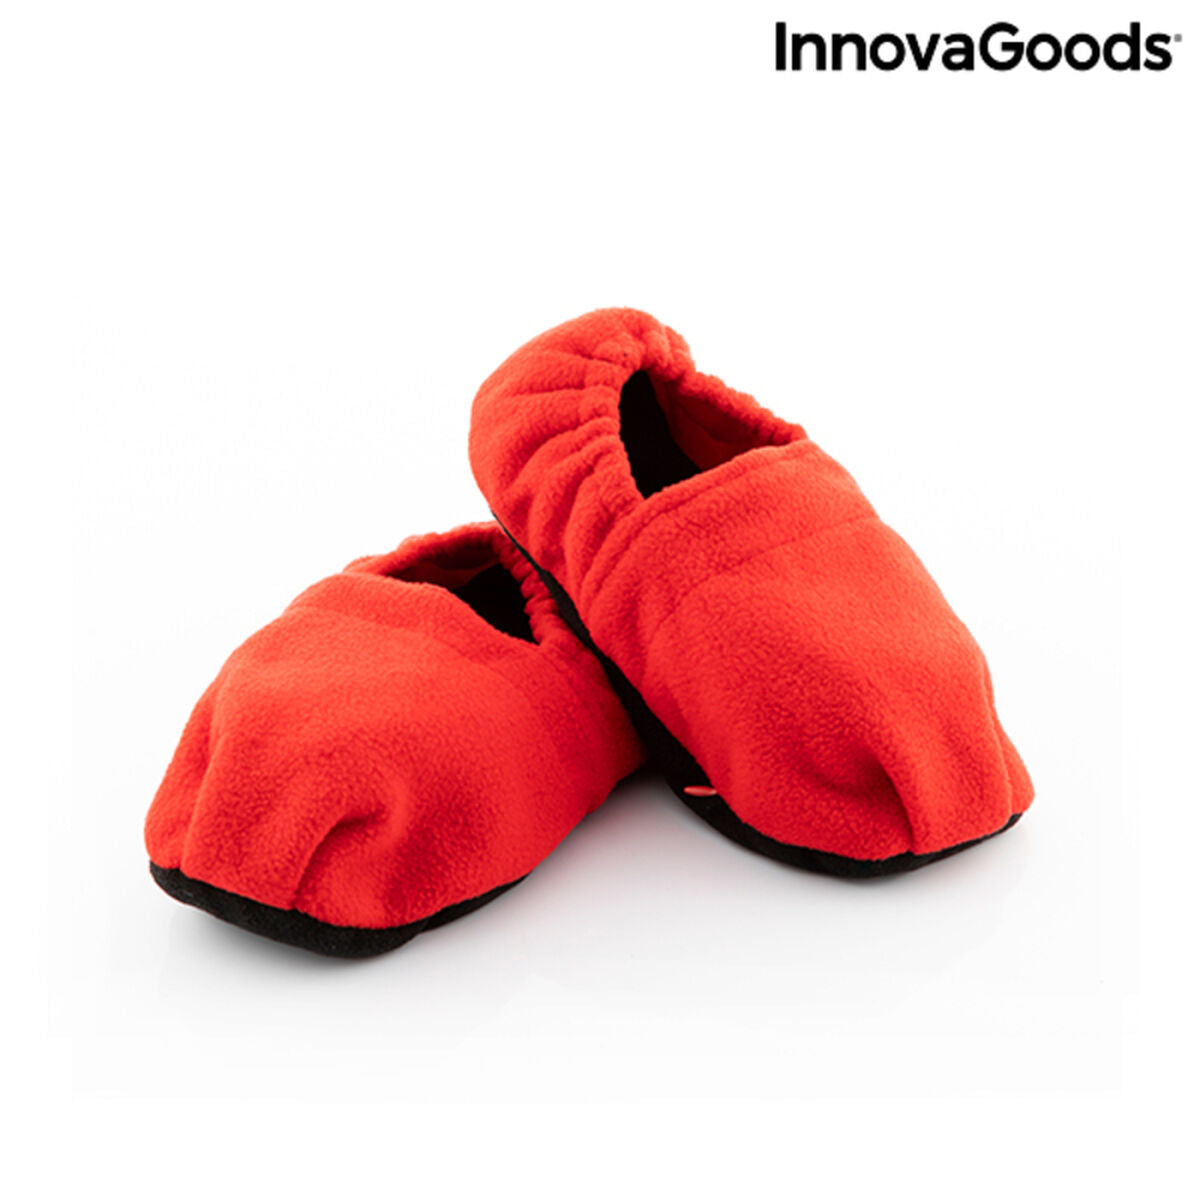 Verwarde slippers, op te warmen in de magnetron InnovaGoods Rood